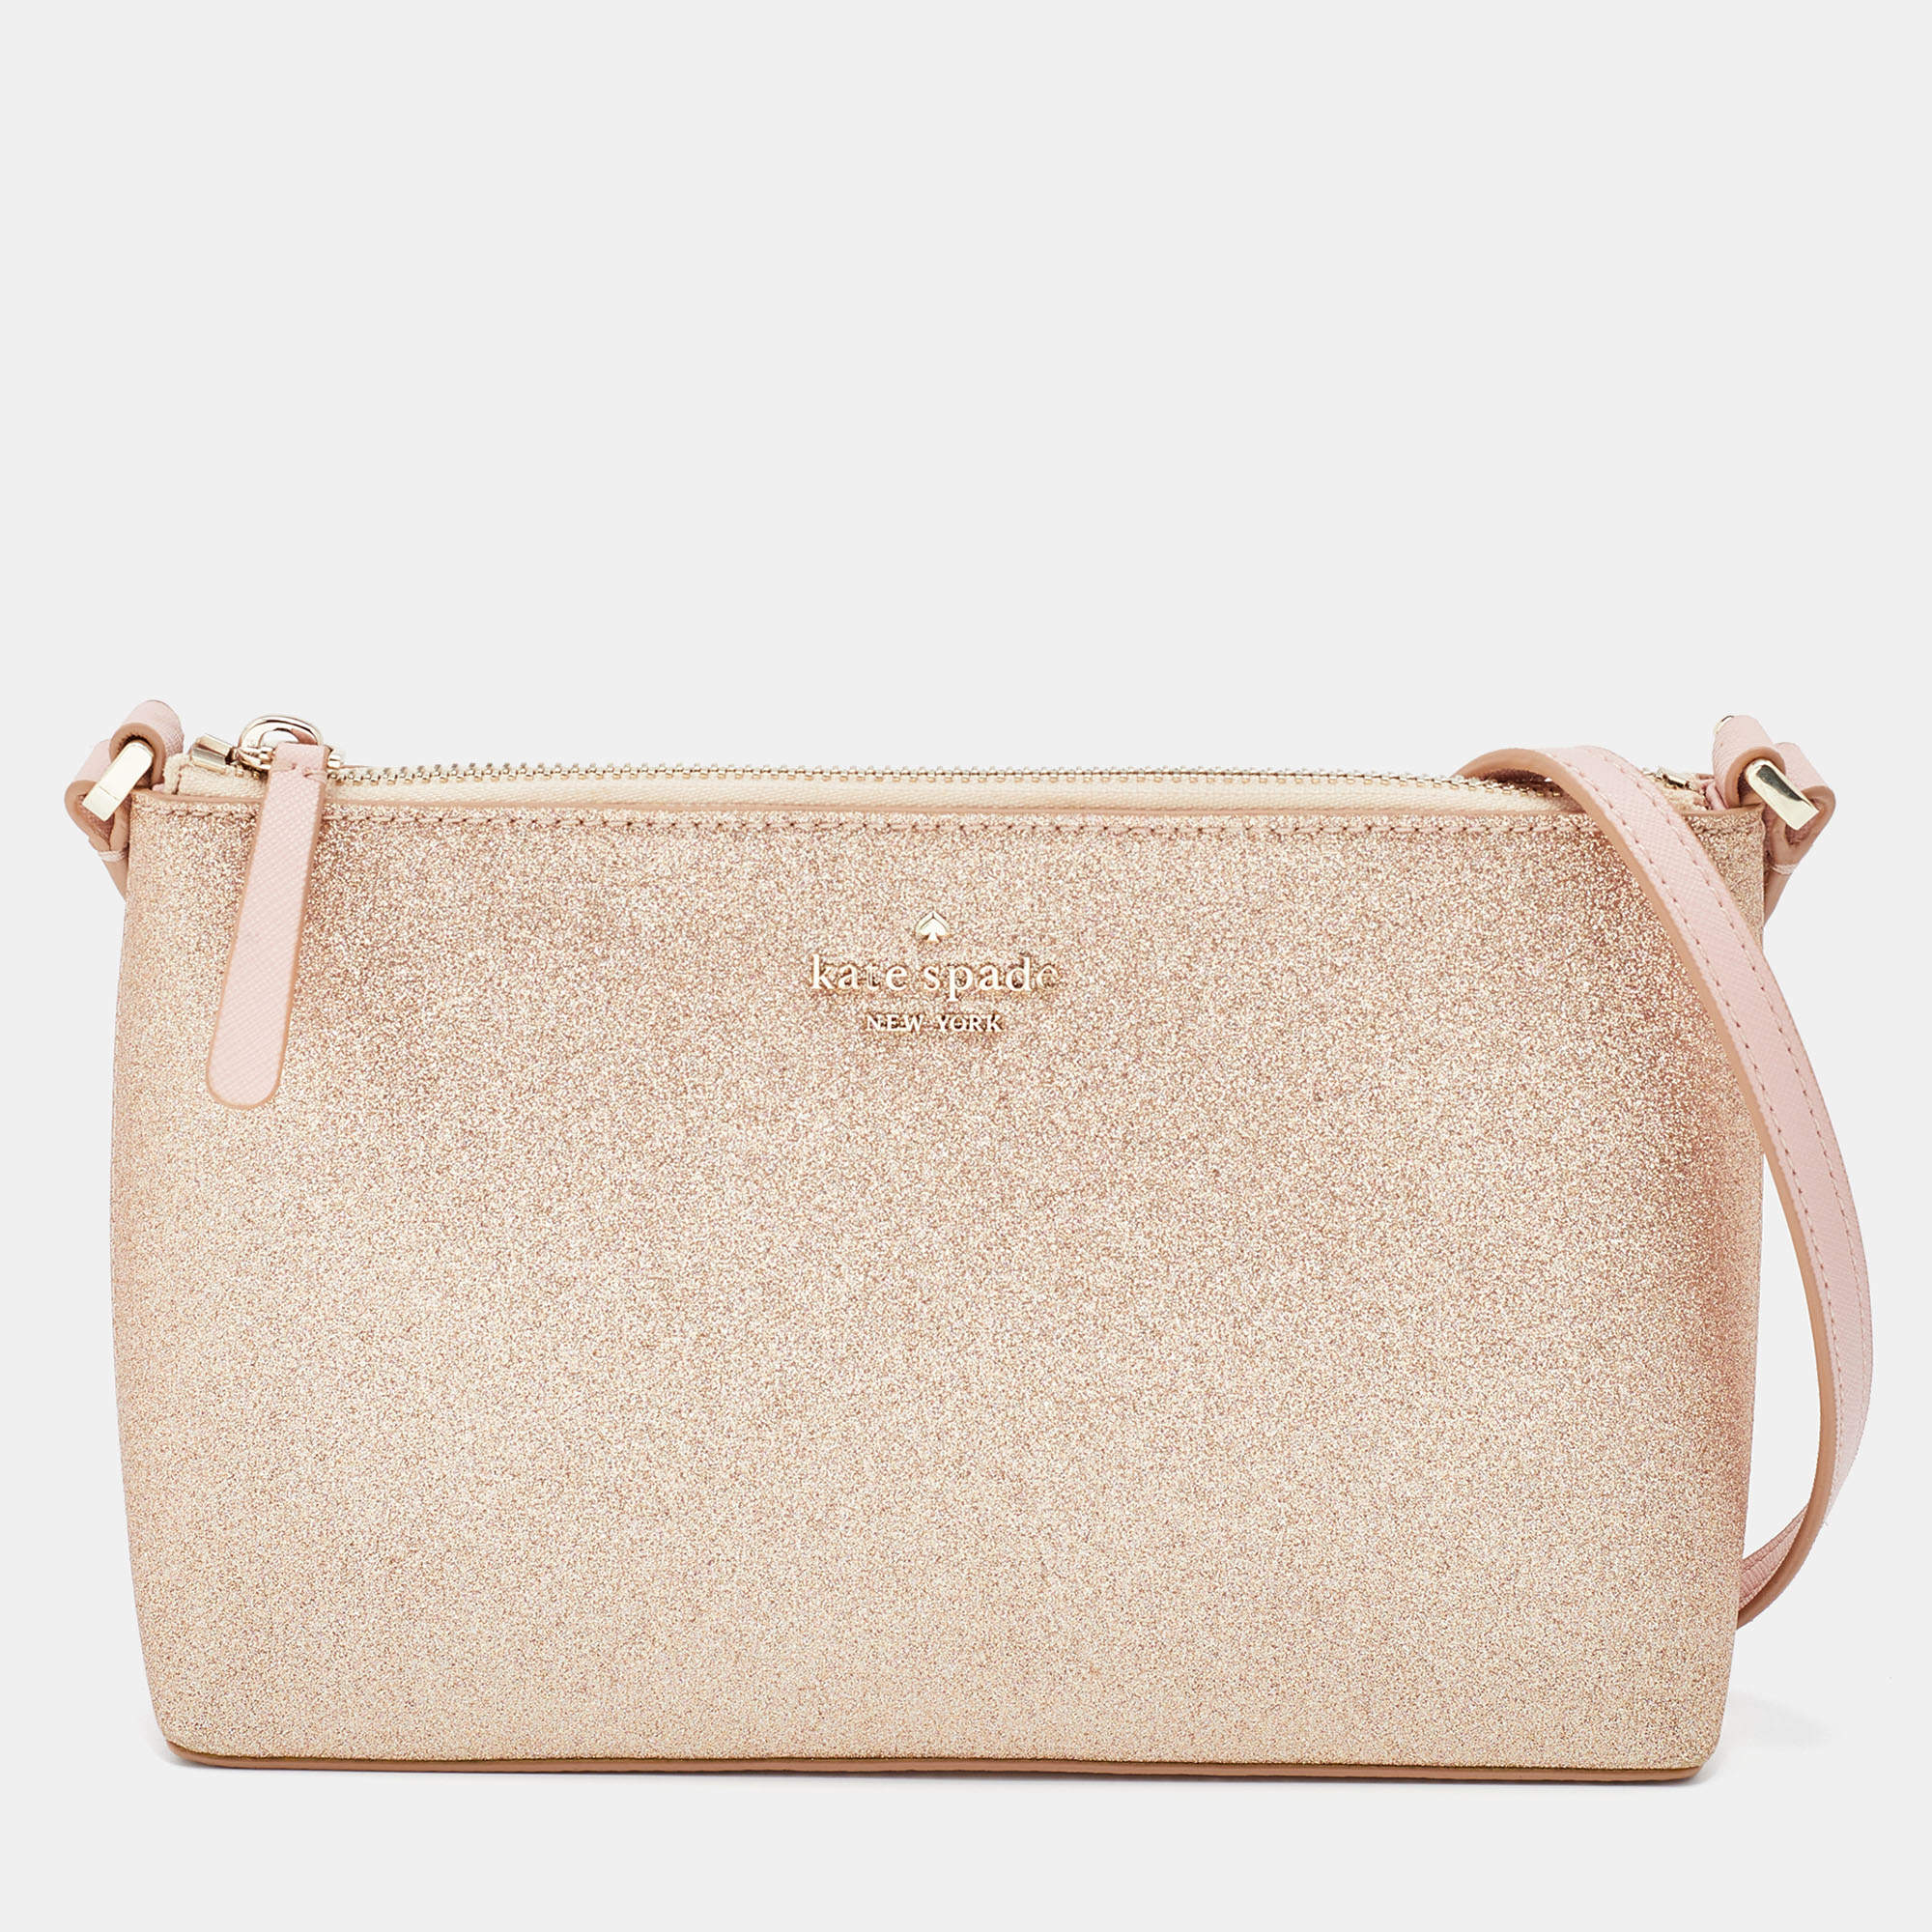 Kate Spade New York Haven Lane Hani Pink Glitter Polka Dot Handbag. Shared  by Career Path Design | Kate spade, Handbag, Favorite handbags